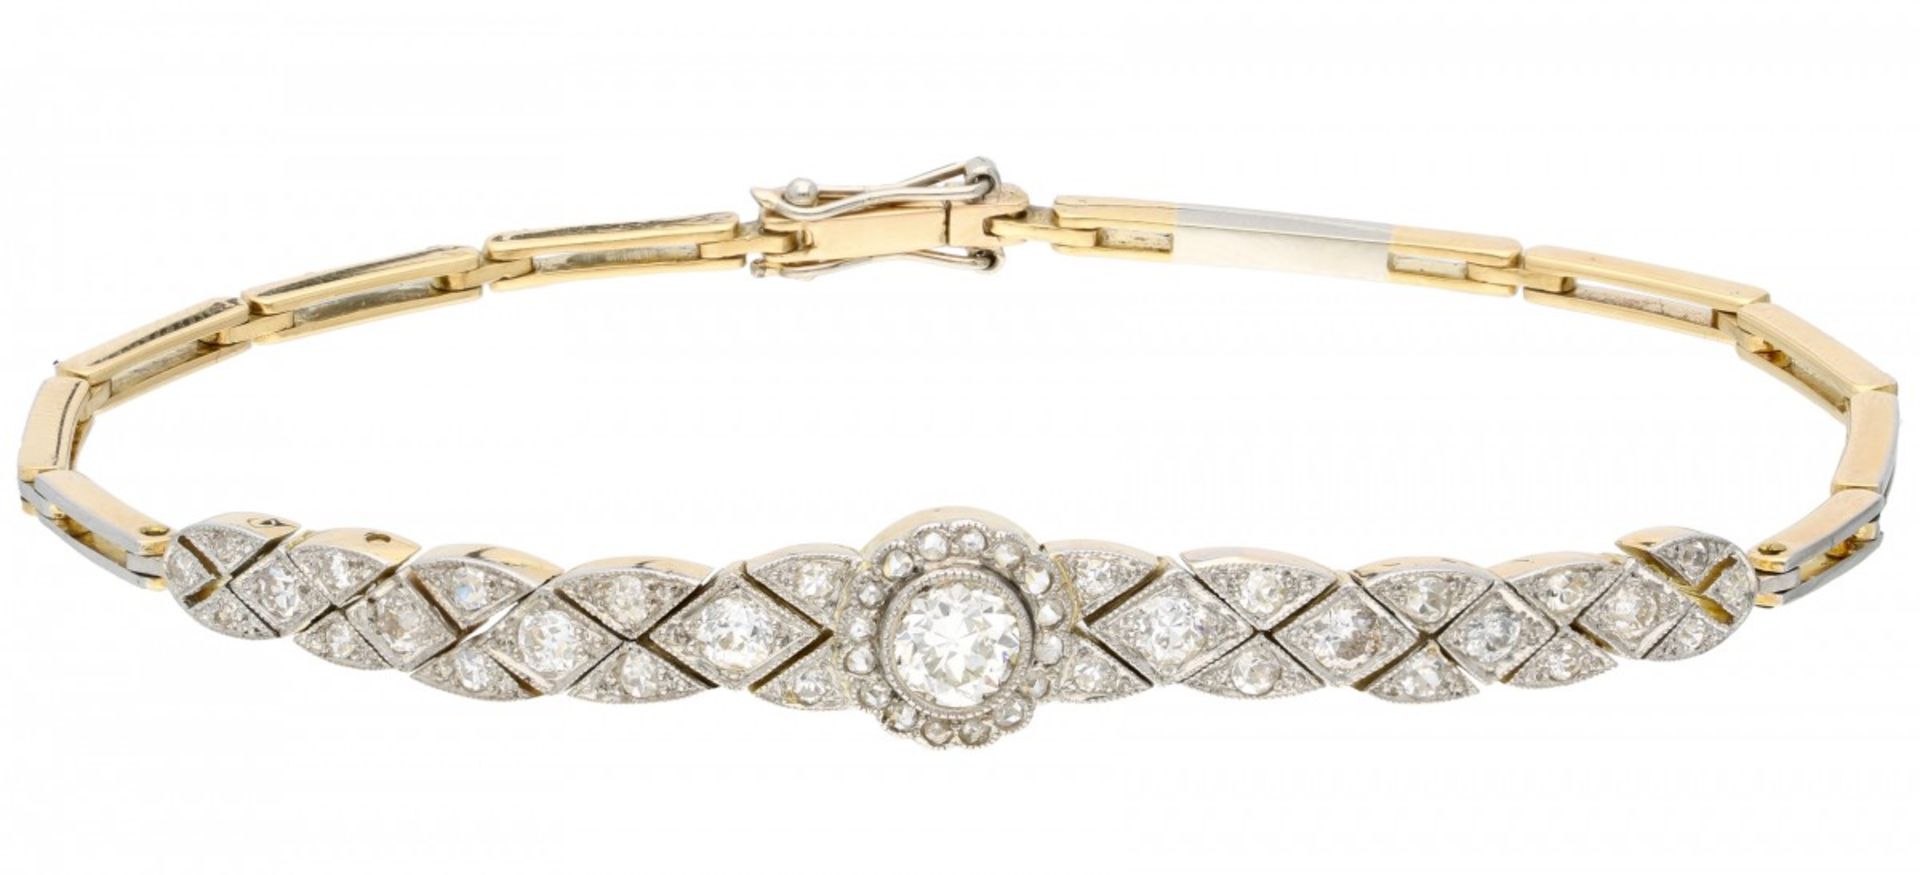 Bicolor gold Art Deco bracelet set with approx. 0.88 ct. diamond - 18 ct.